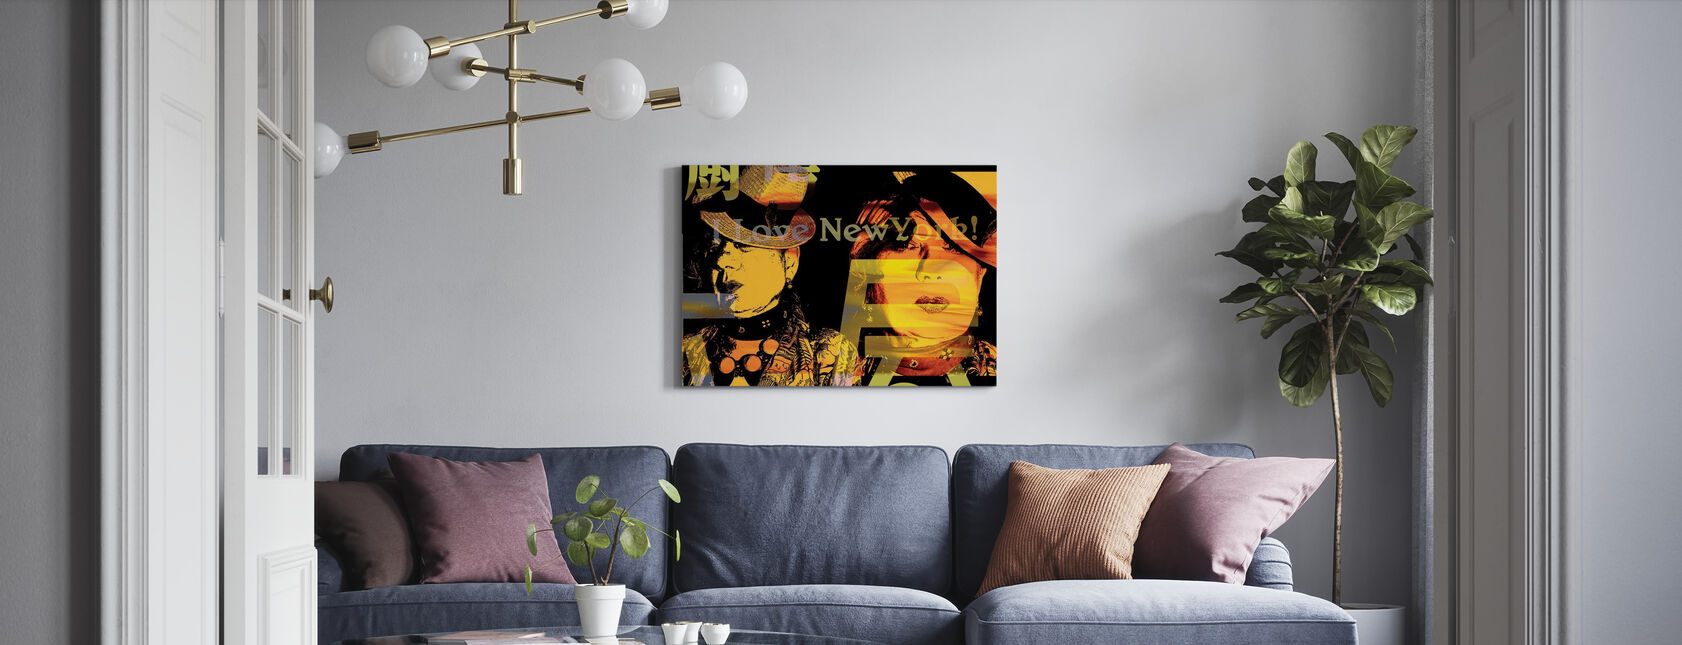 Anna P - Canvas print - Living Room